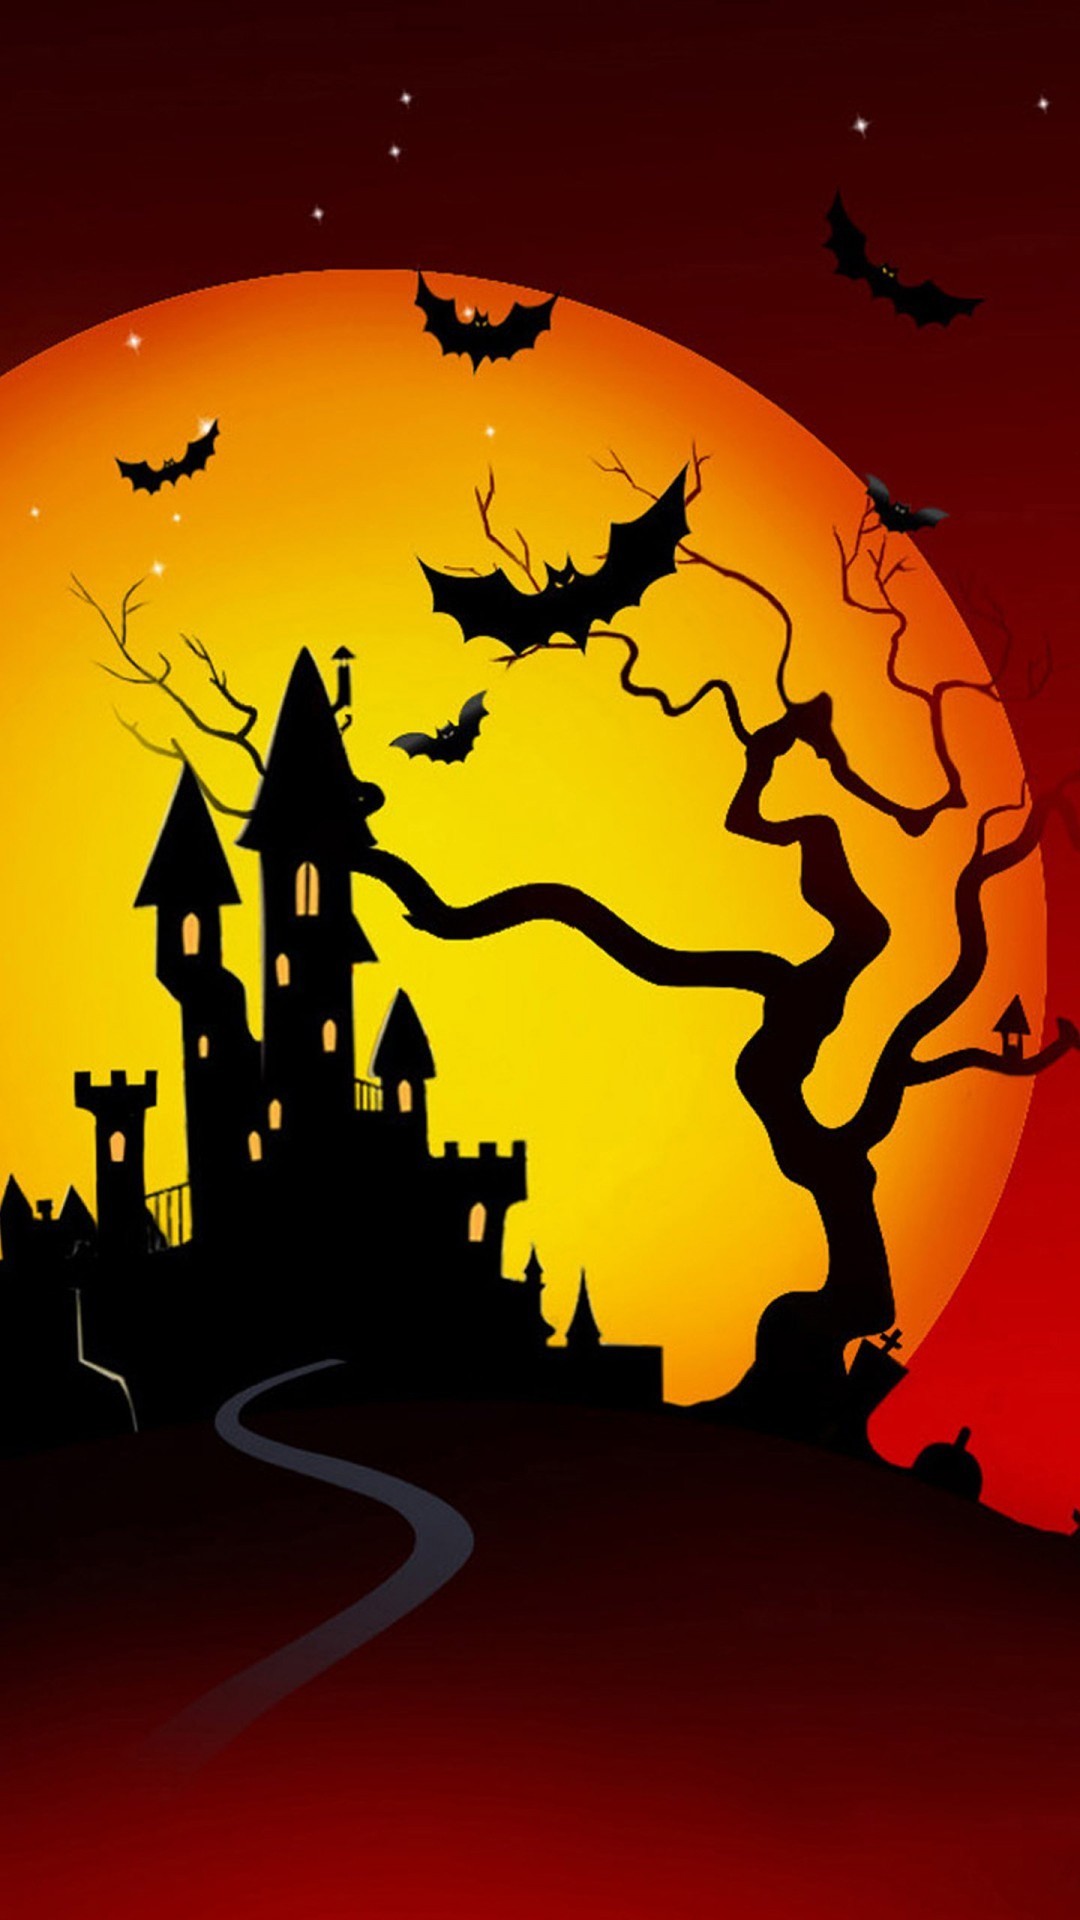 1080x1920 castle halloween wallpaper ; halloween-bats-and-castle-wallpaper-background-